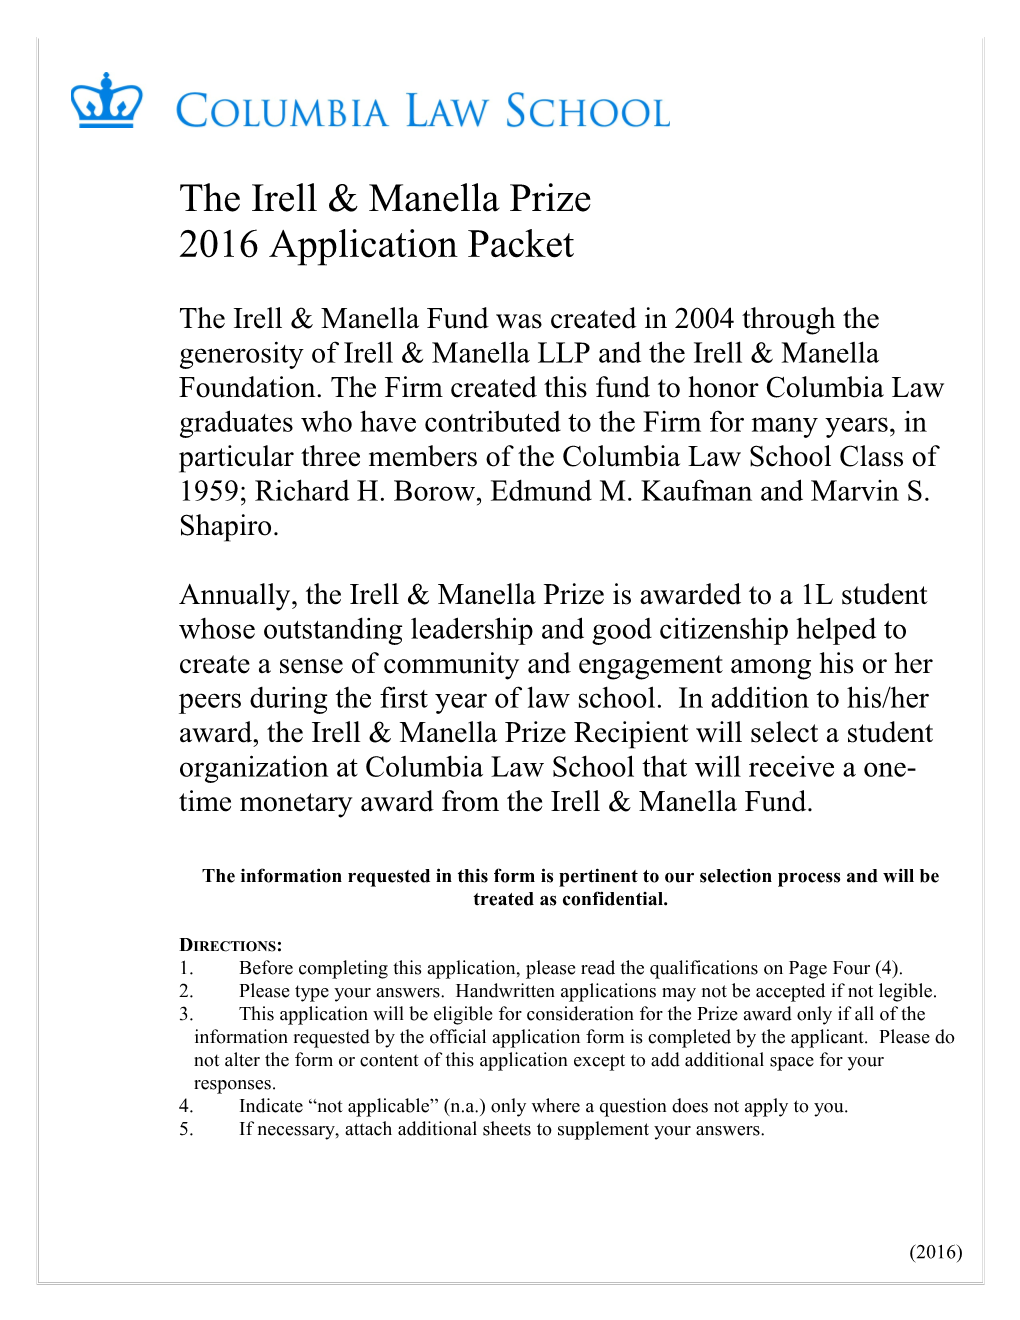 The Irell & Manella Prize